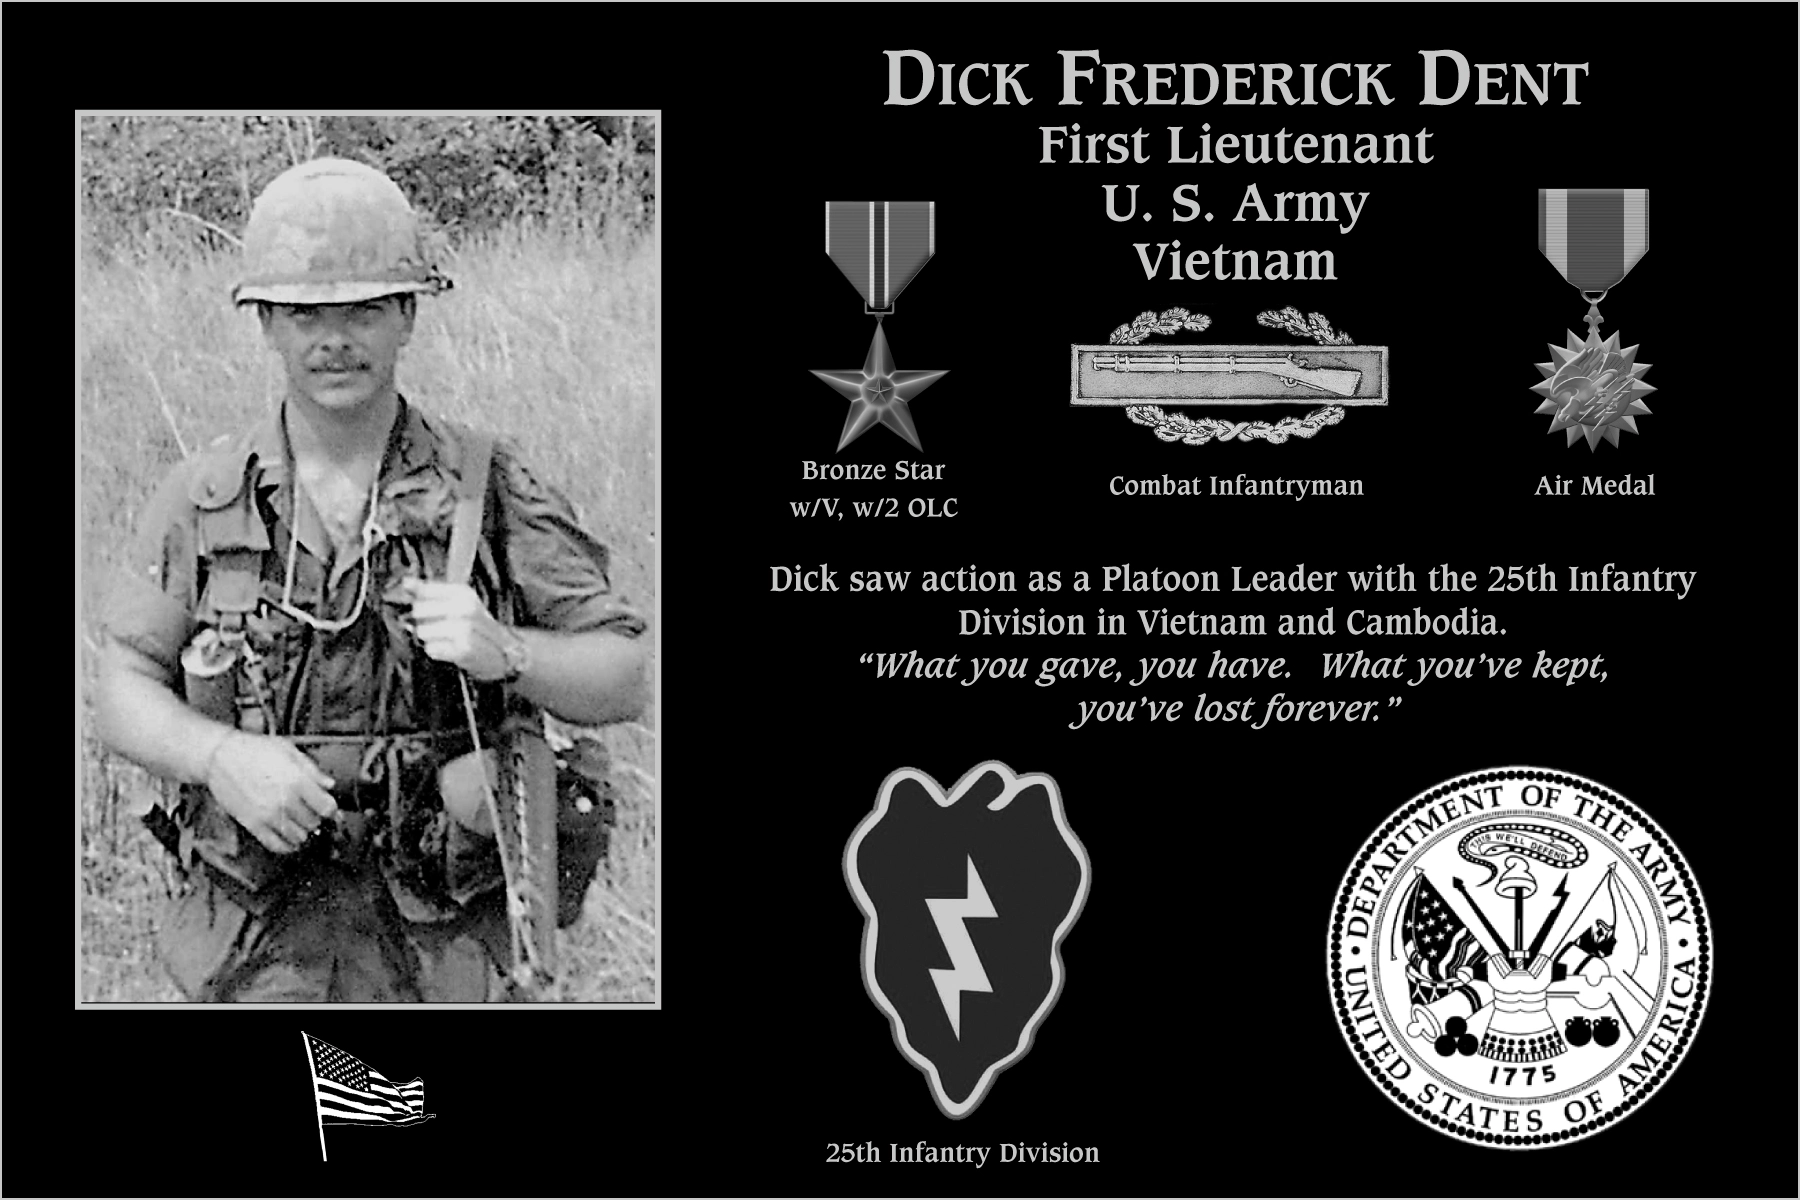 Dick Frederick Dent